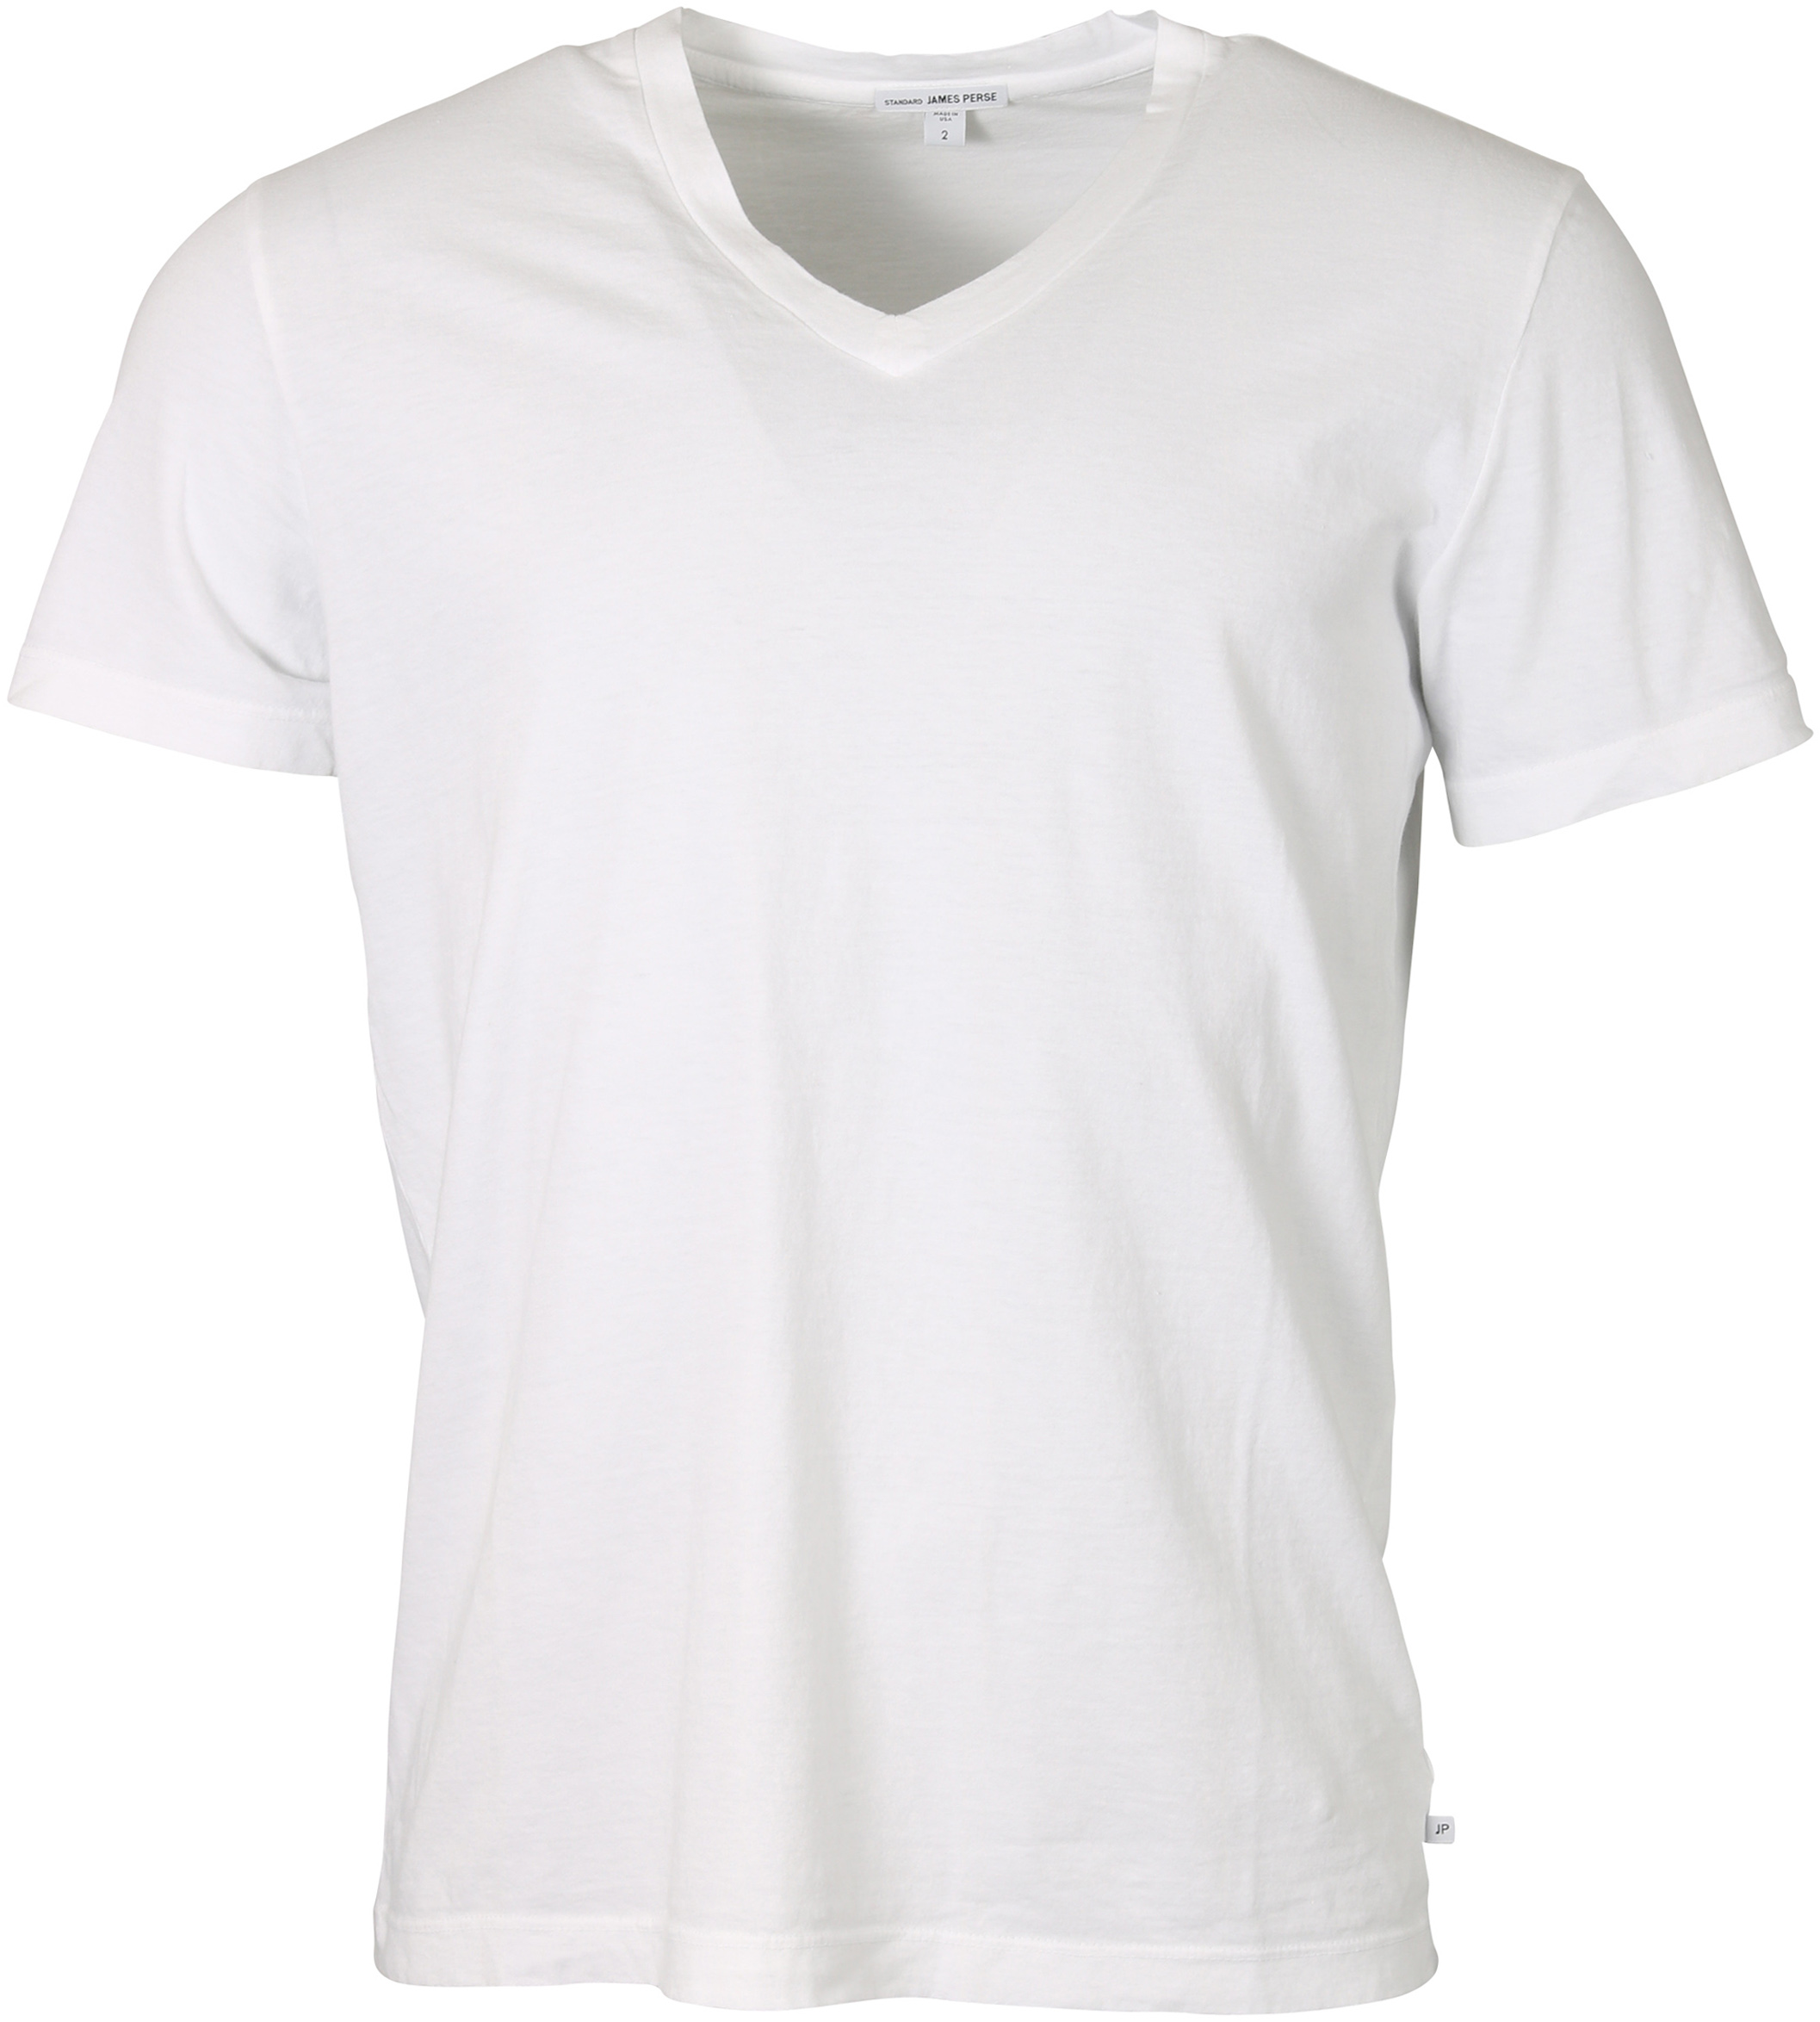 JAMES PERSE T-Shirt V-Neck White